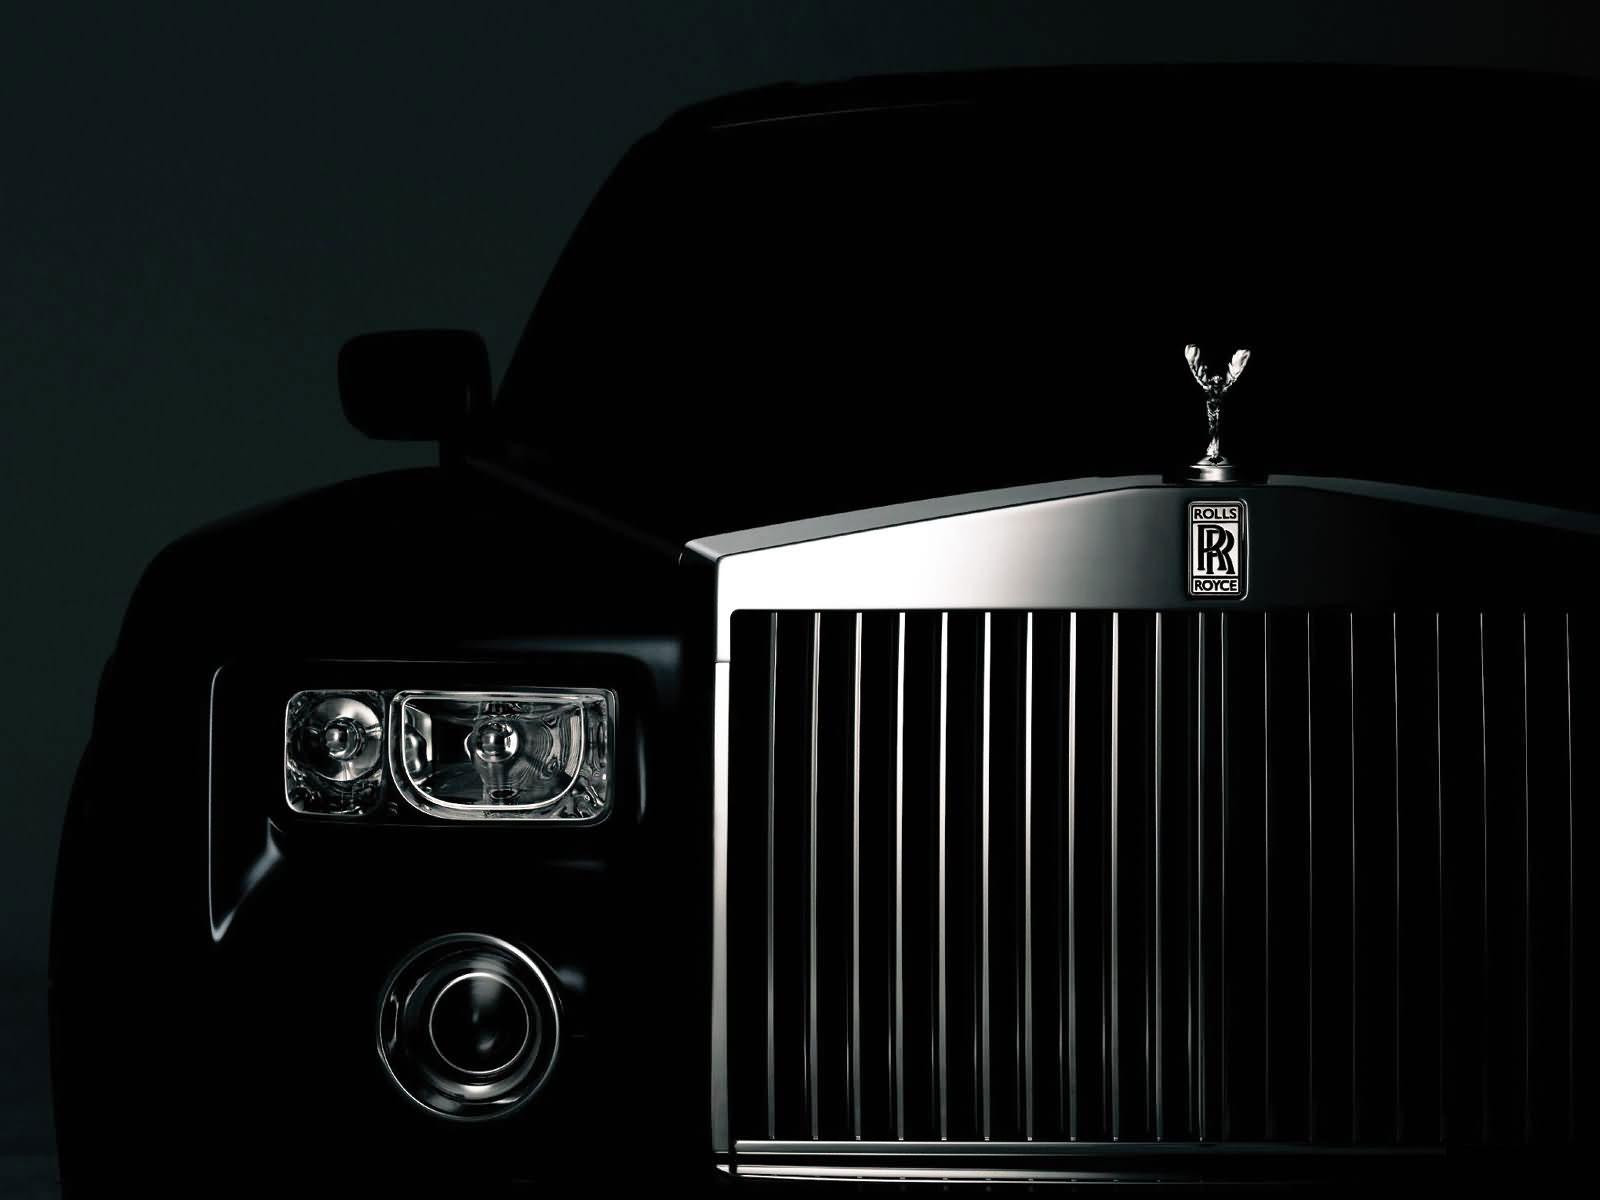 Rolls Royce Phantom Wallpaper And Background